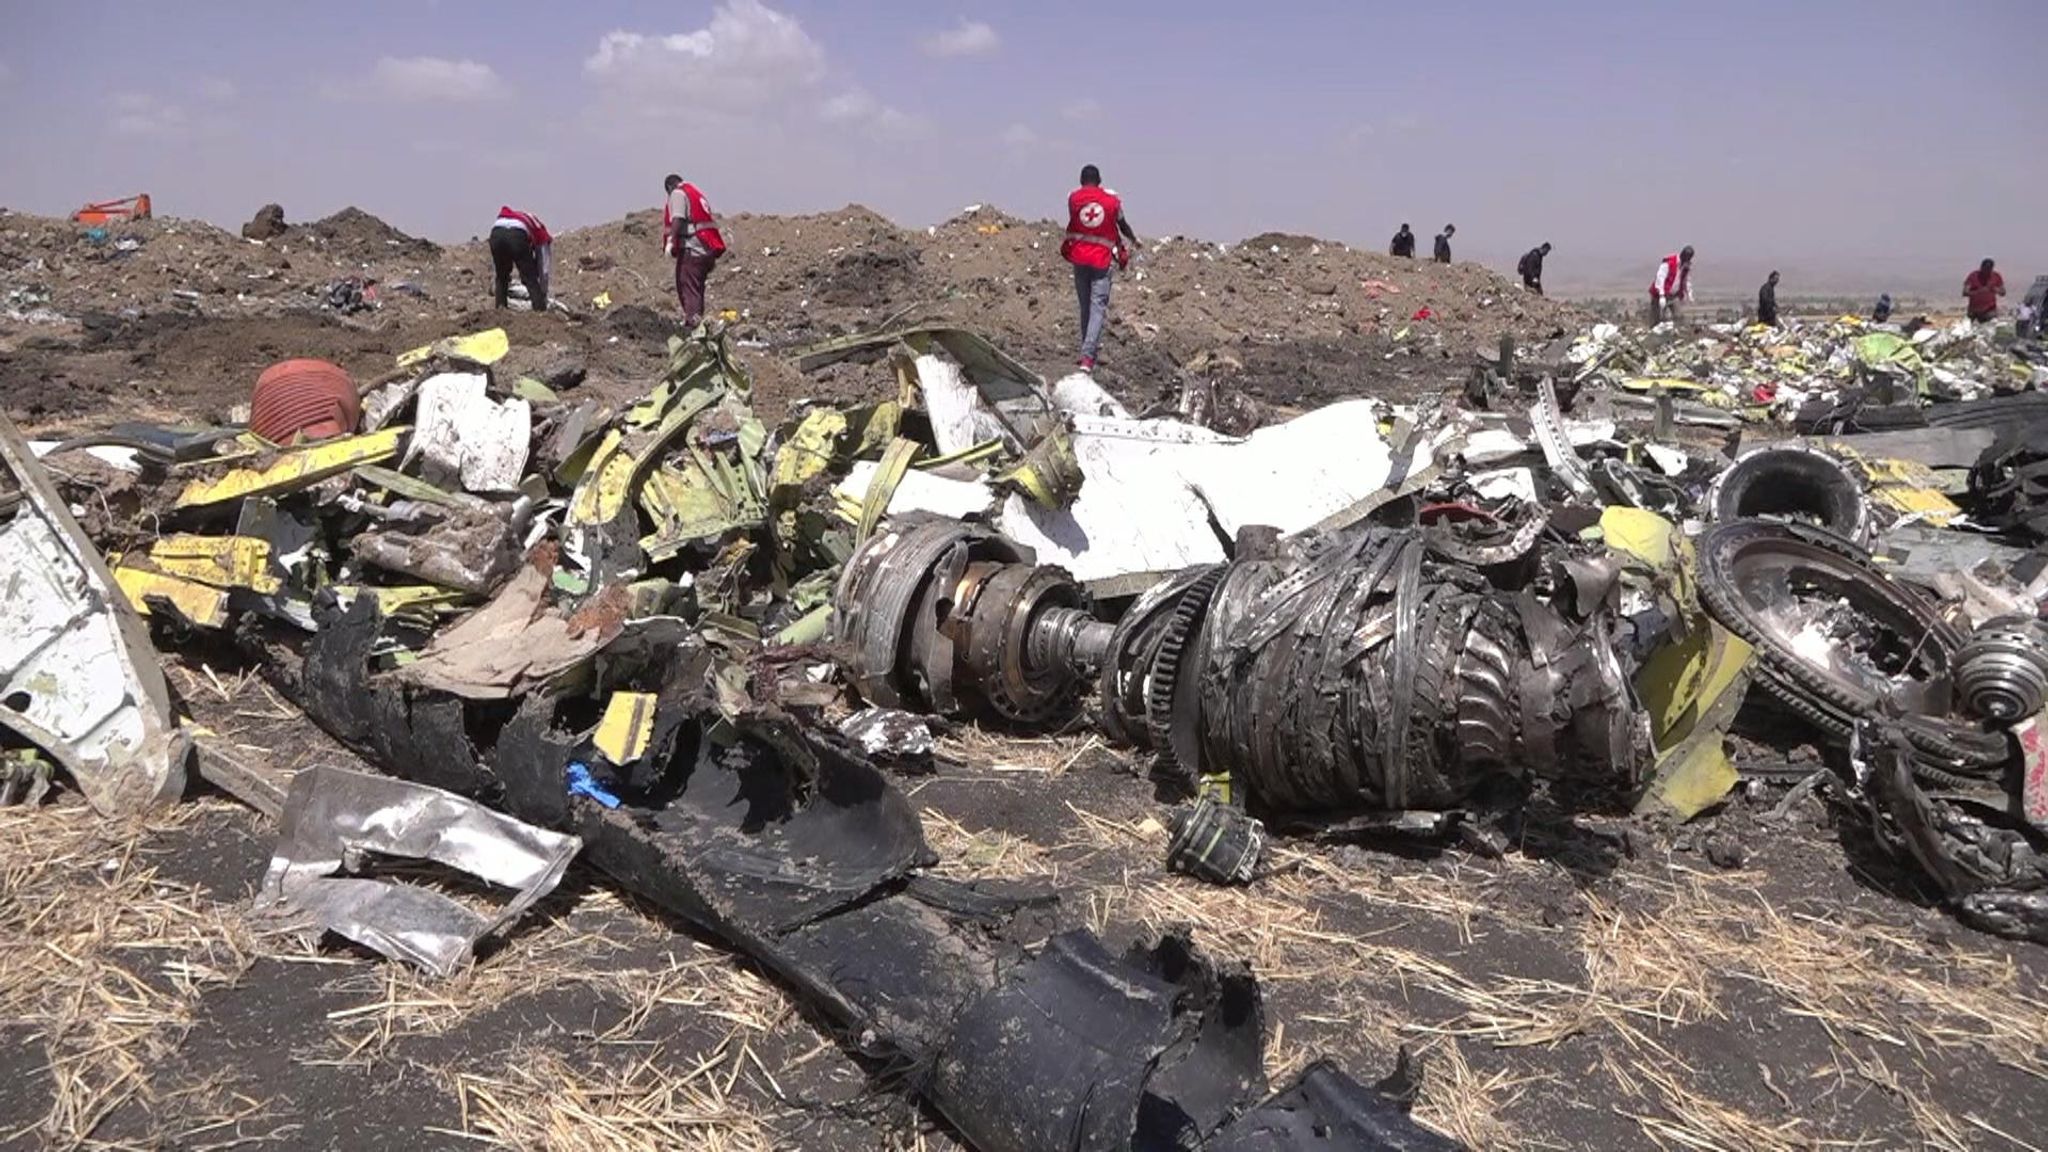 Ethiopia Plane Crash Faulty Sensor Data Led To Crash That Killed 157 People Report Finds 